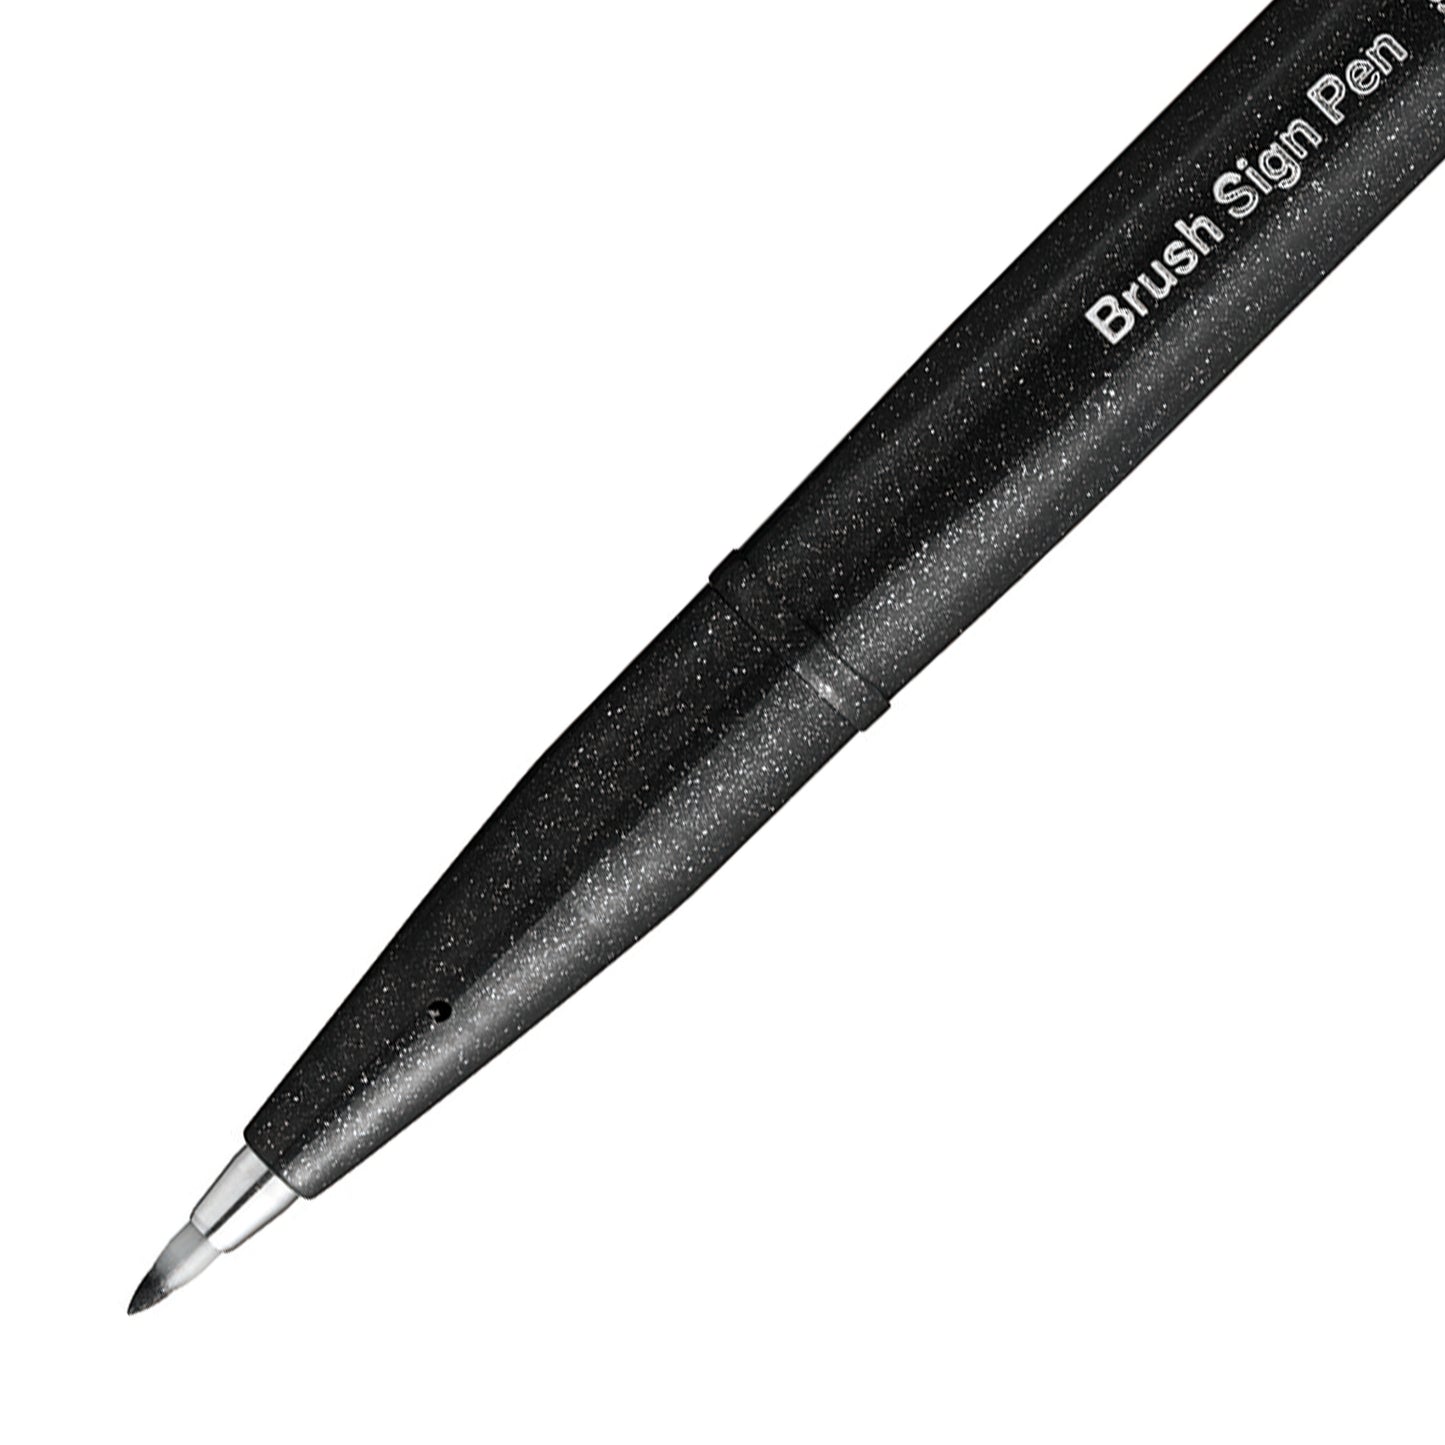 Pentel Brush Calligraphy Pen (Black)